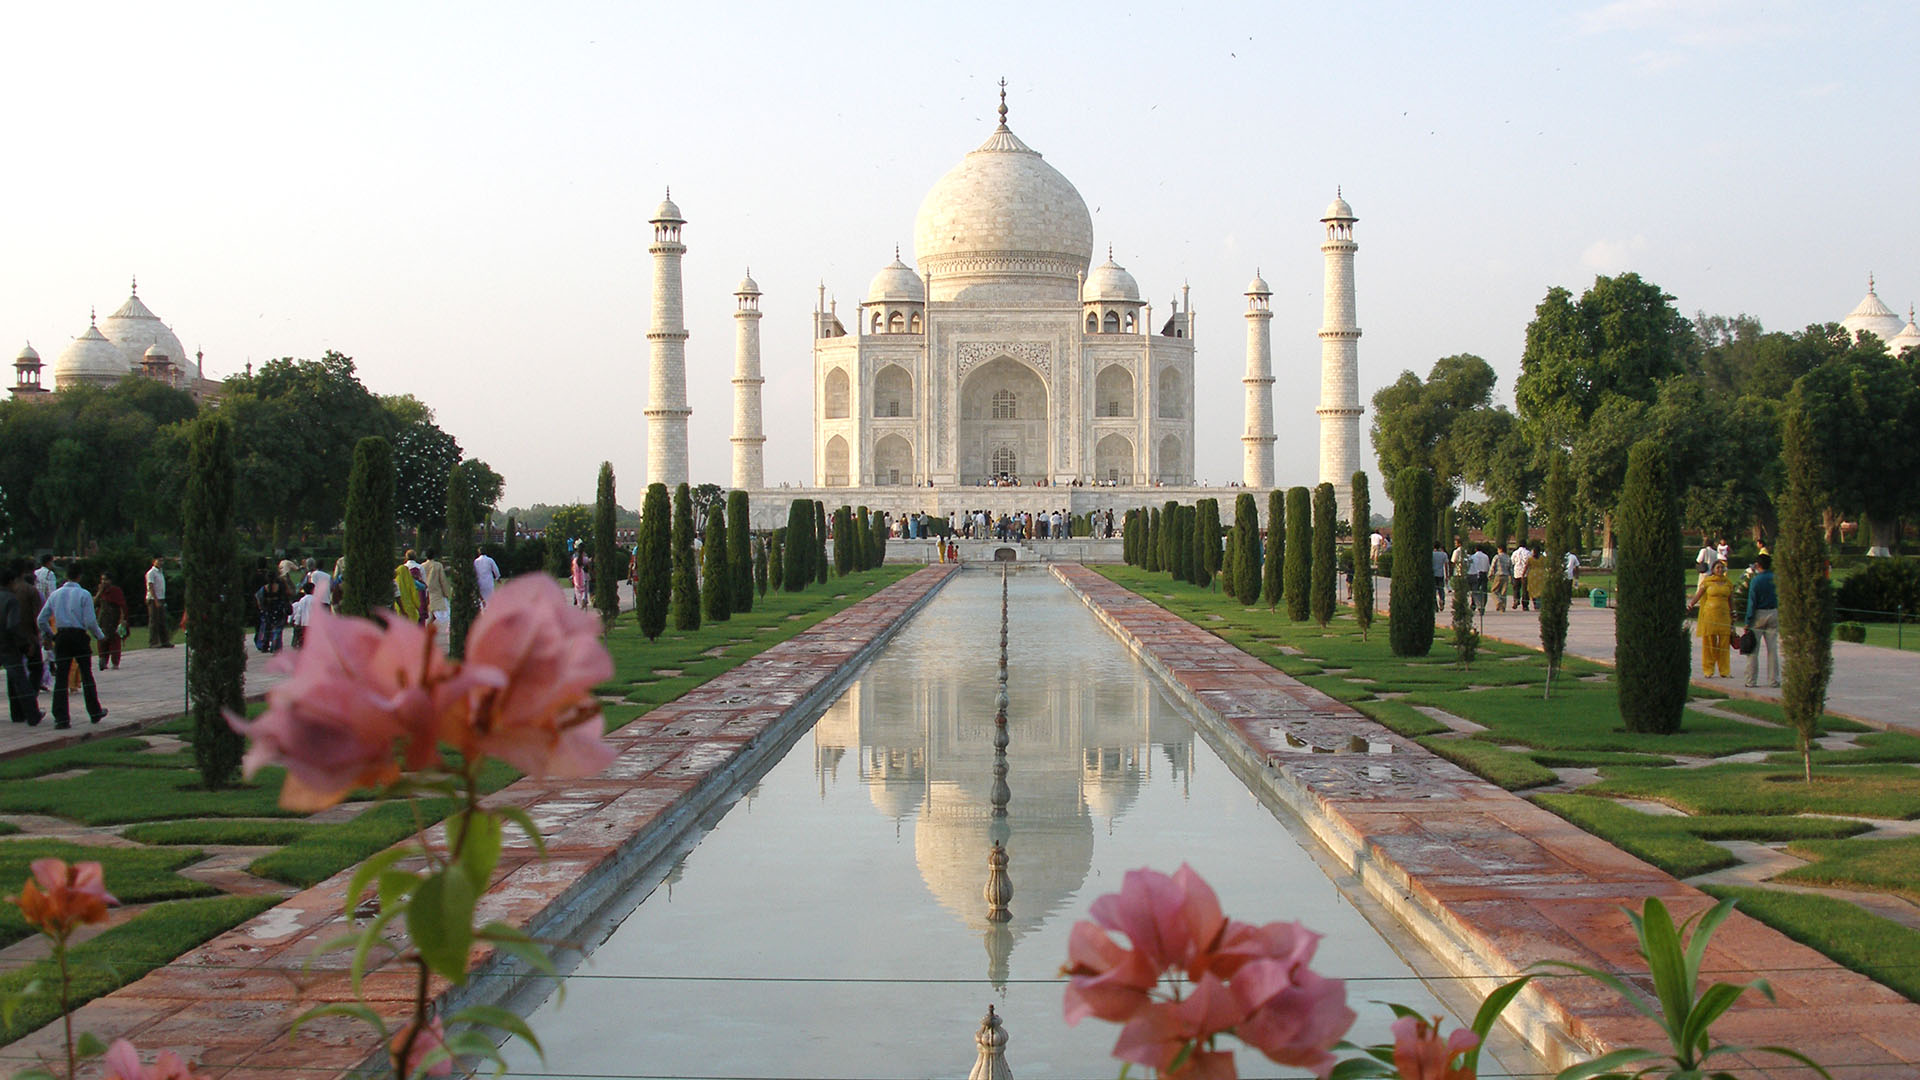 exterior view of the Taj Mahal